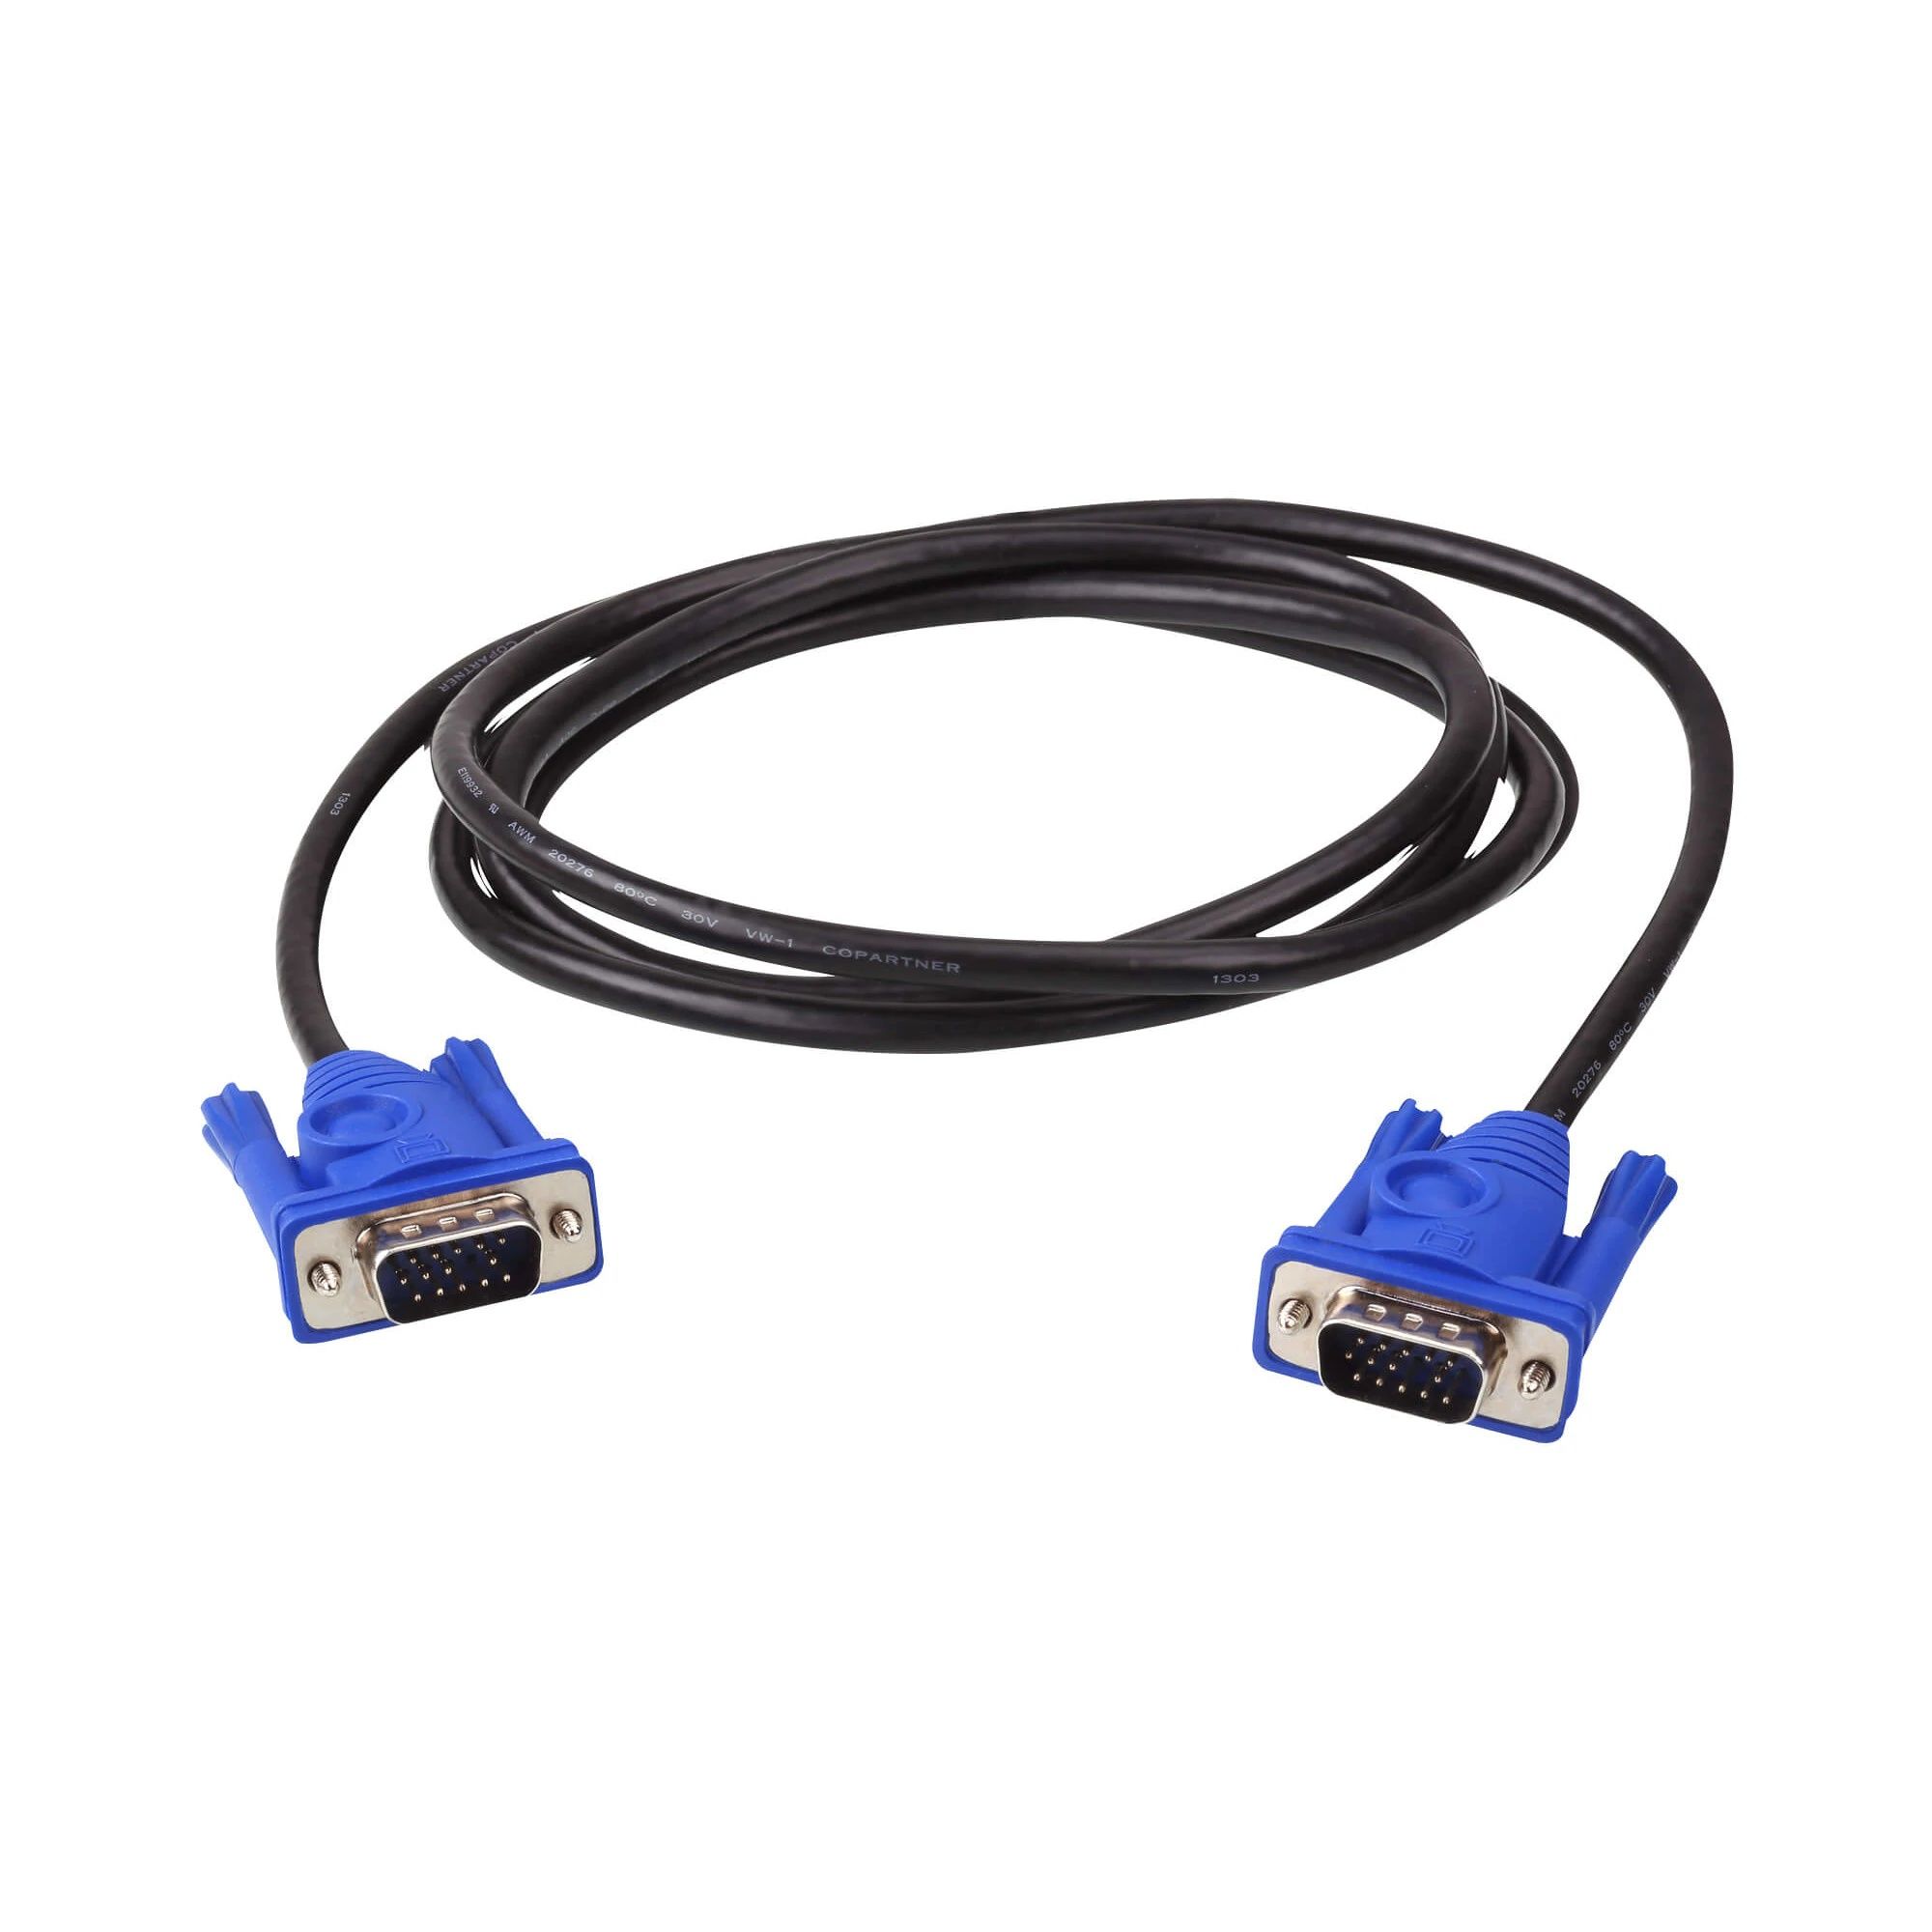 Cablu Hama Profesional, VGA, dublu ecranat, 15 m
Cablu Hama VGA-VGA